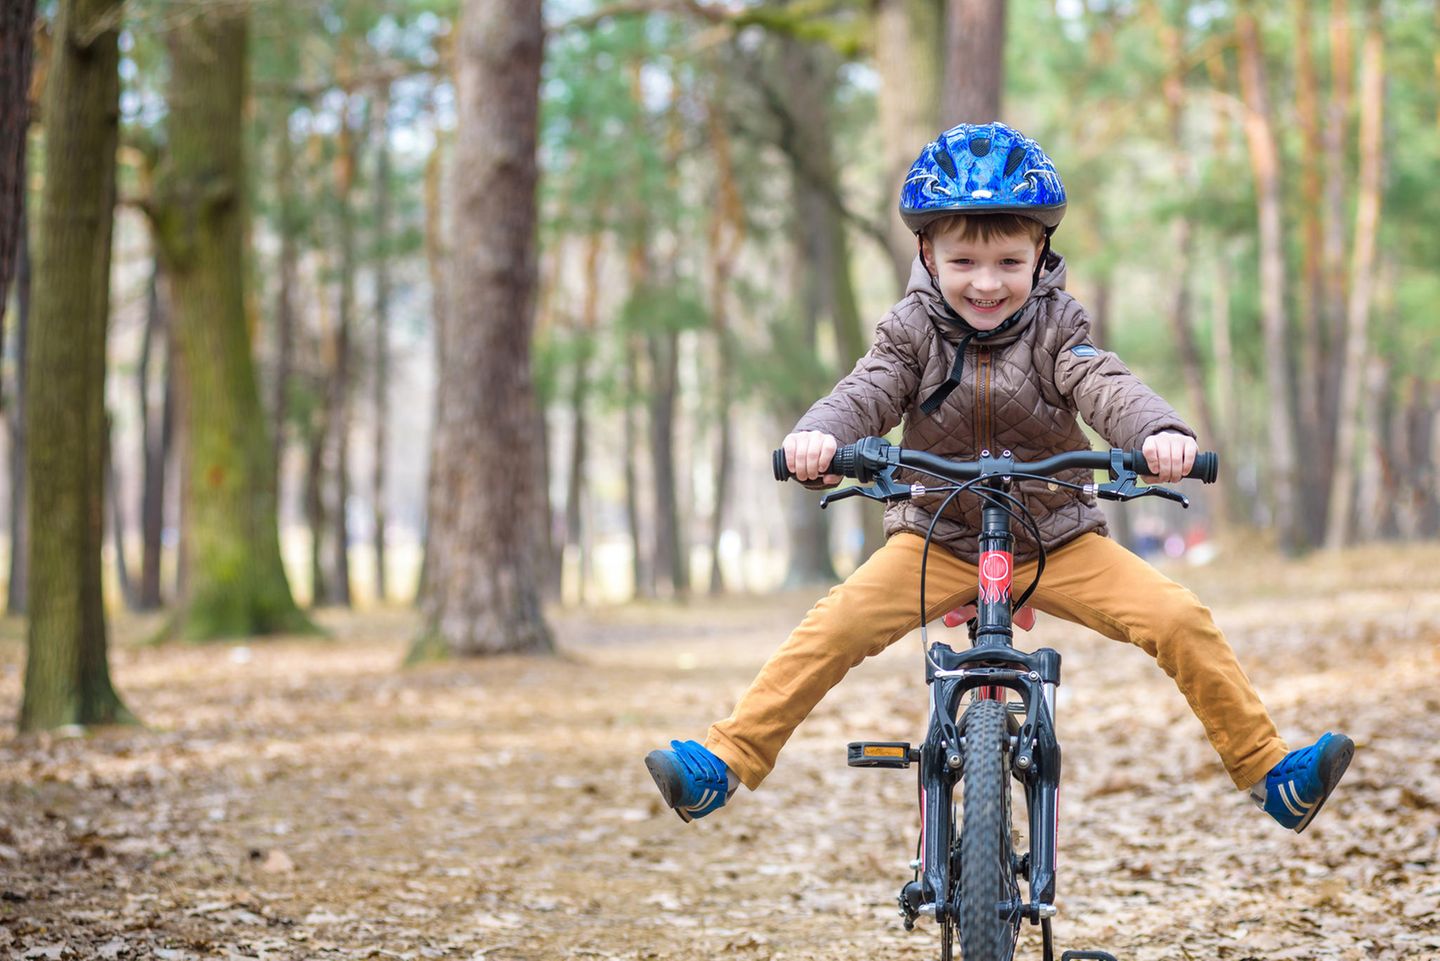 Kinderverhalten: Kind fährt auf Fahrrad